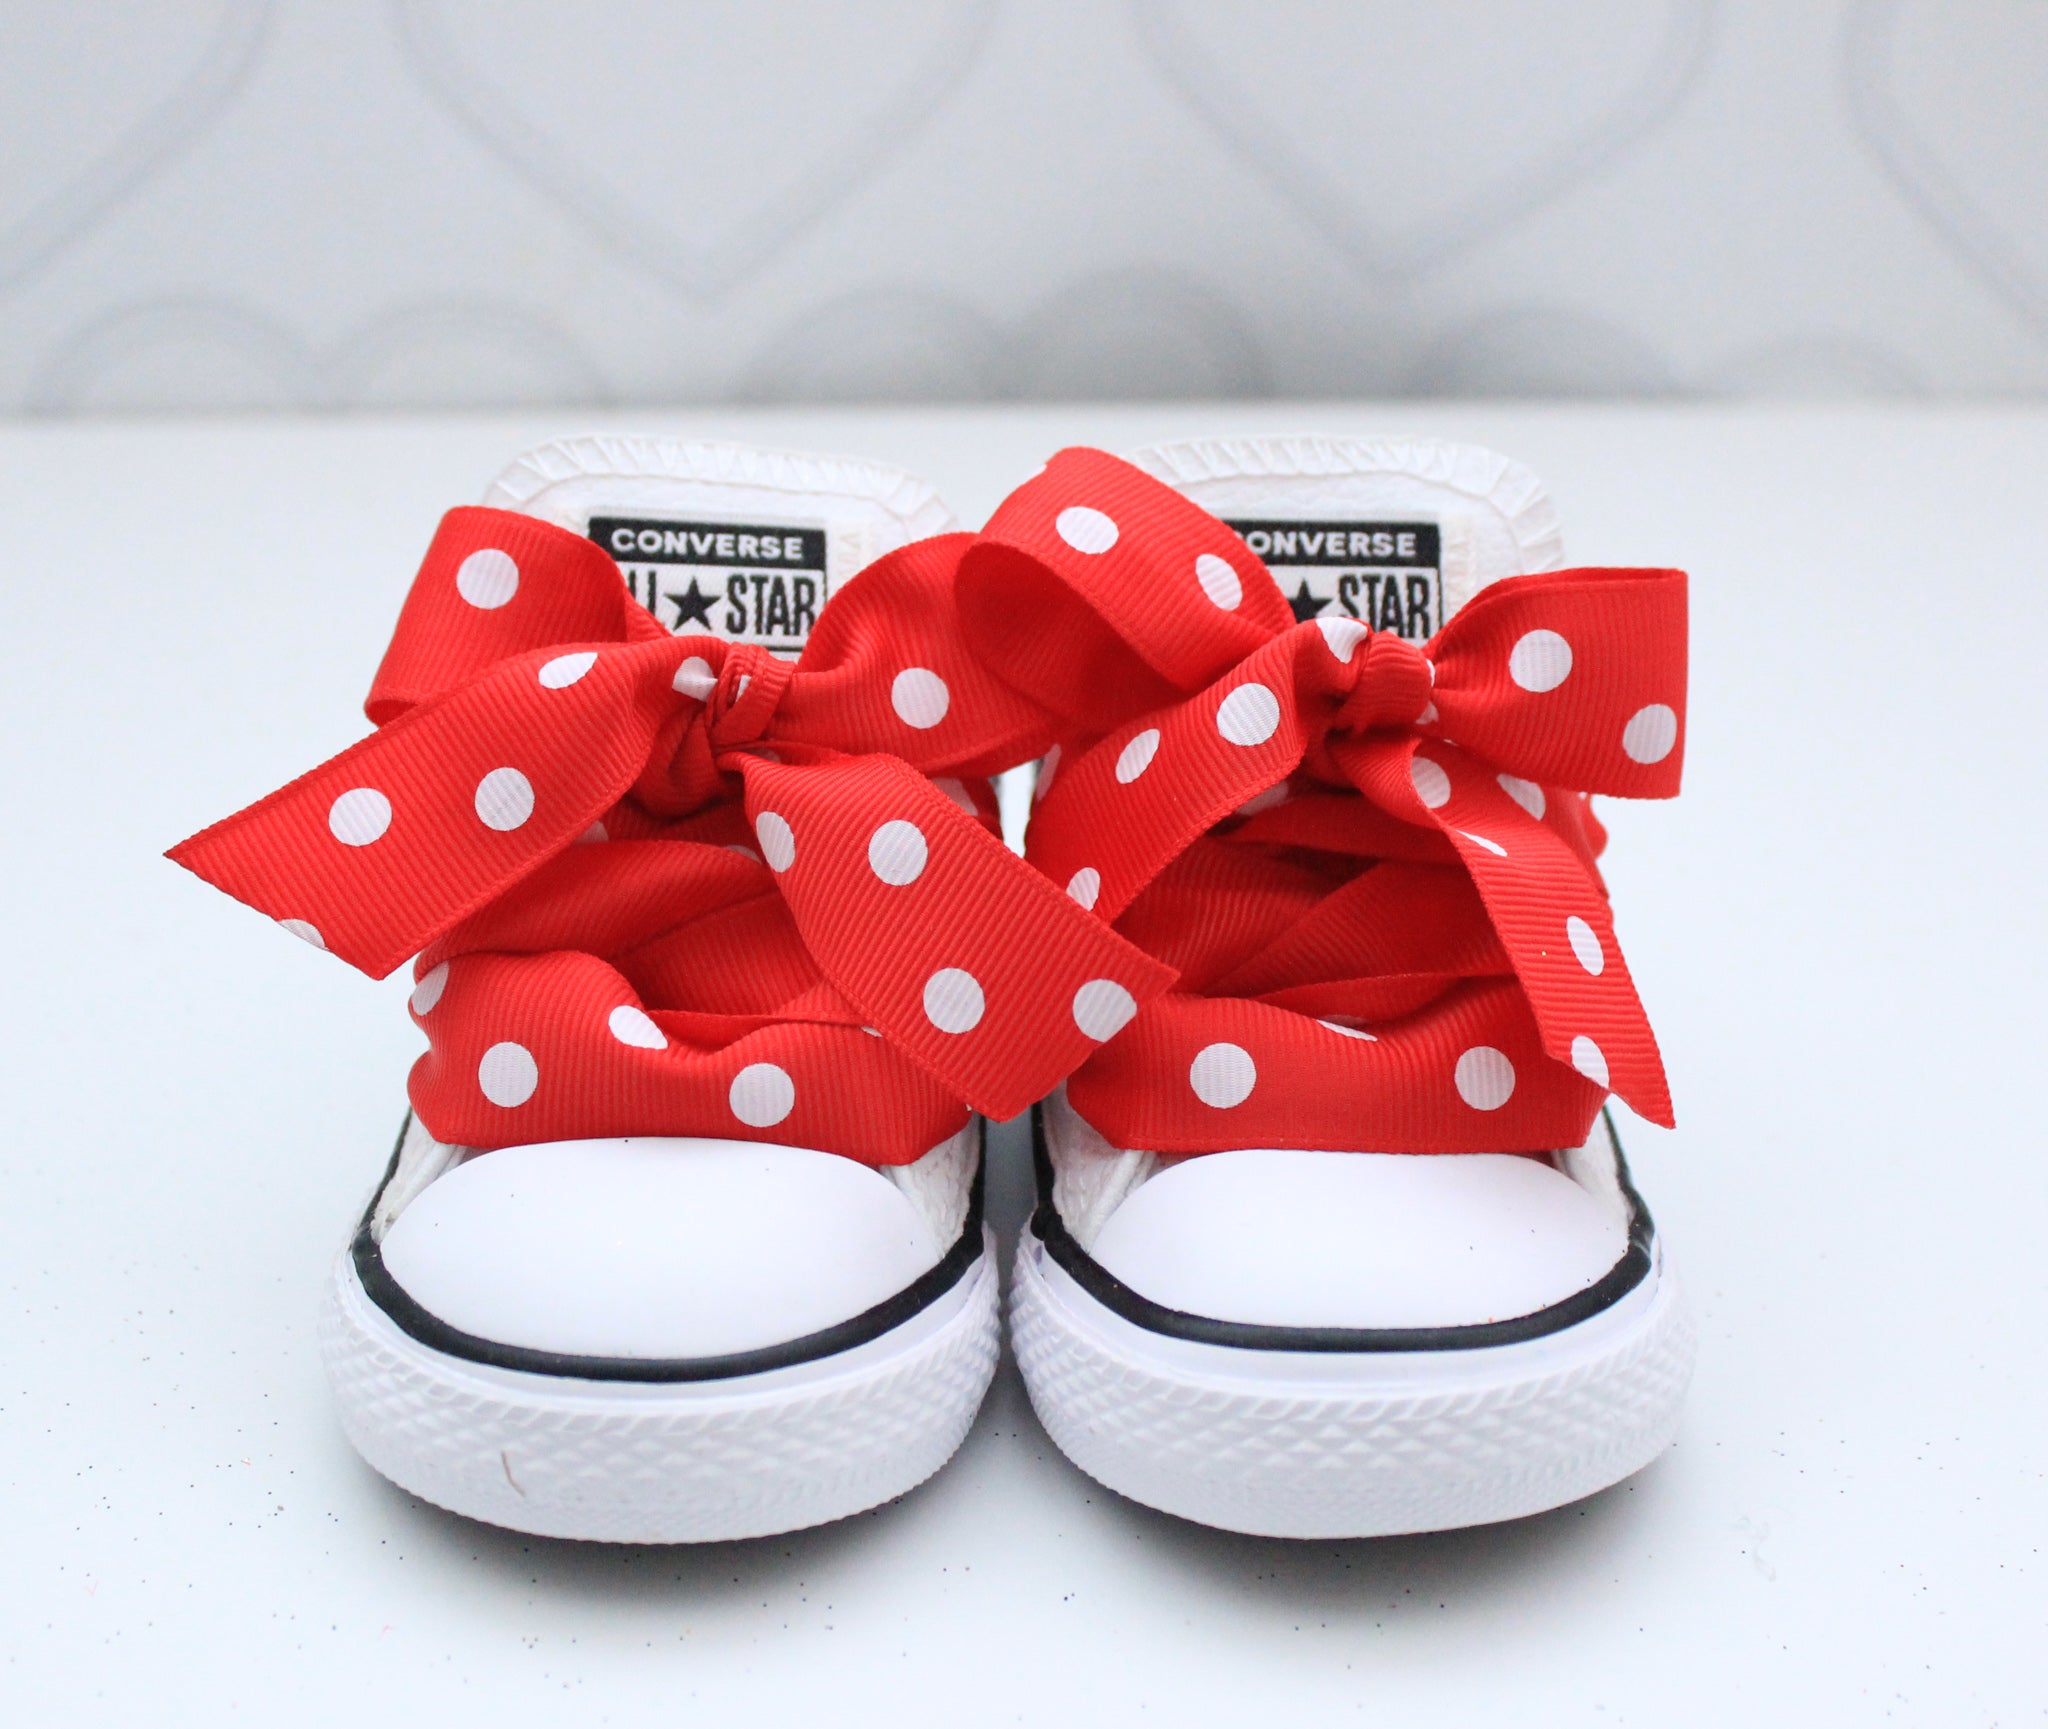 Mouse shoes- Mouse Converse-Minnie converse